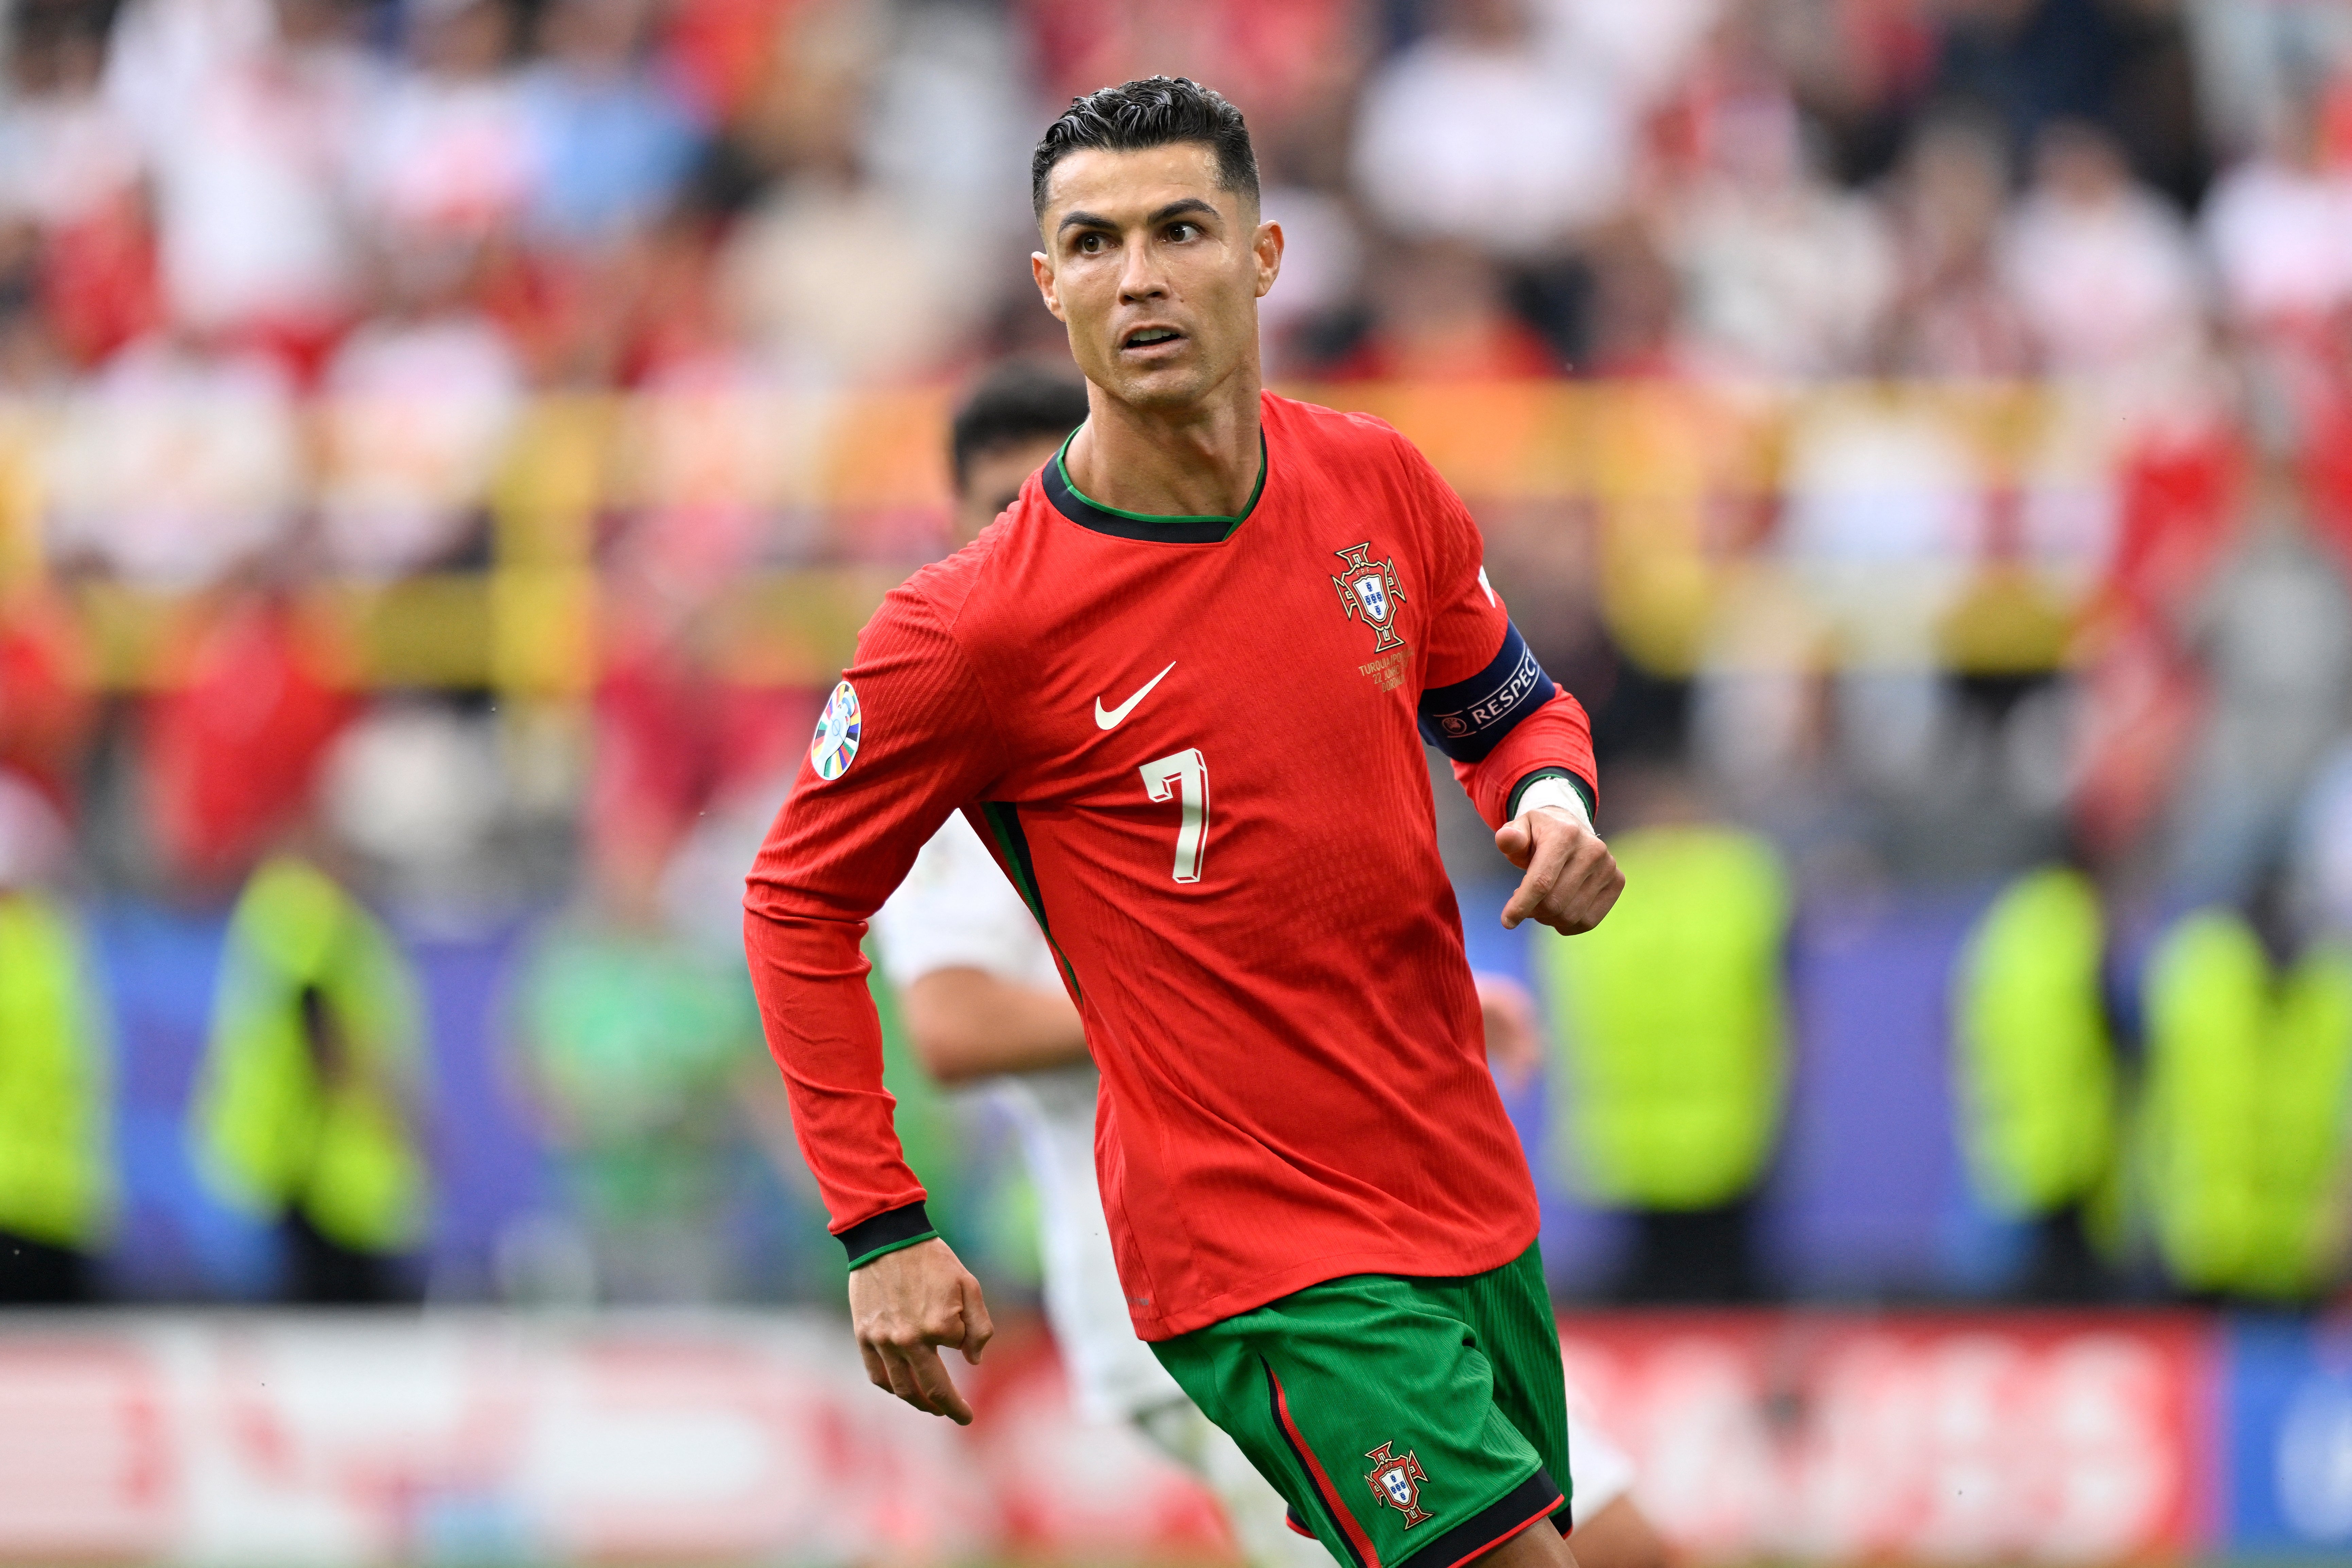 Ronaldo created Bruno Fernandes’ goal against Turkey